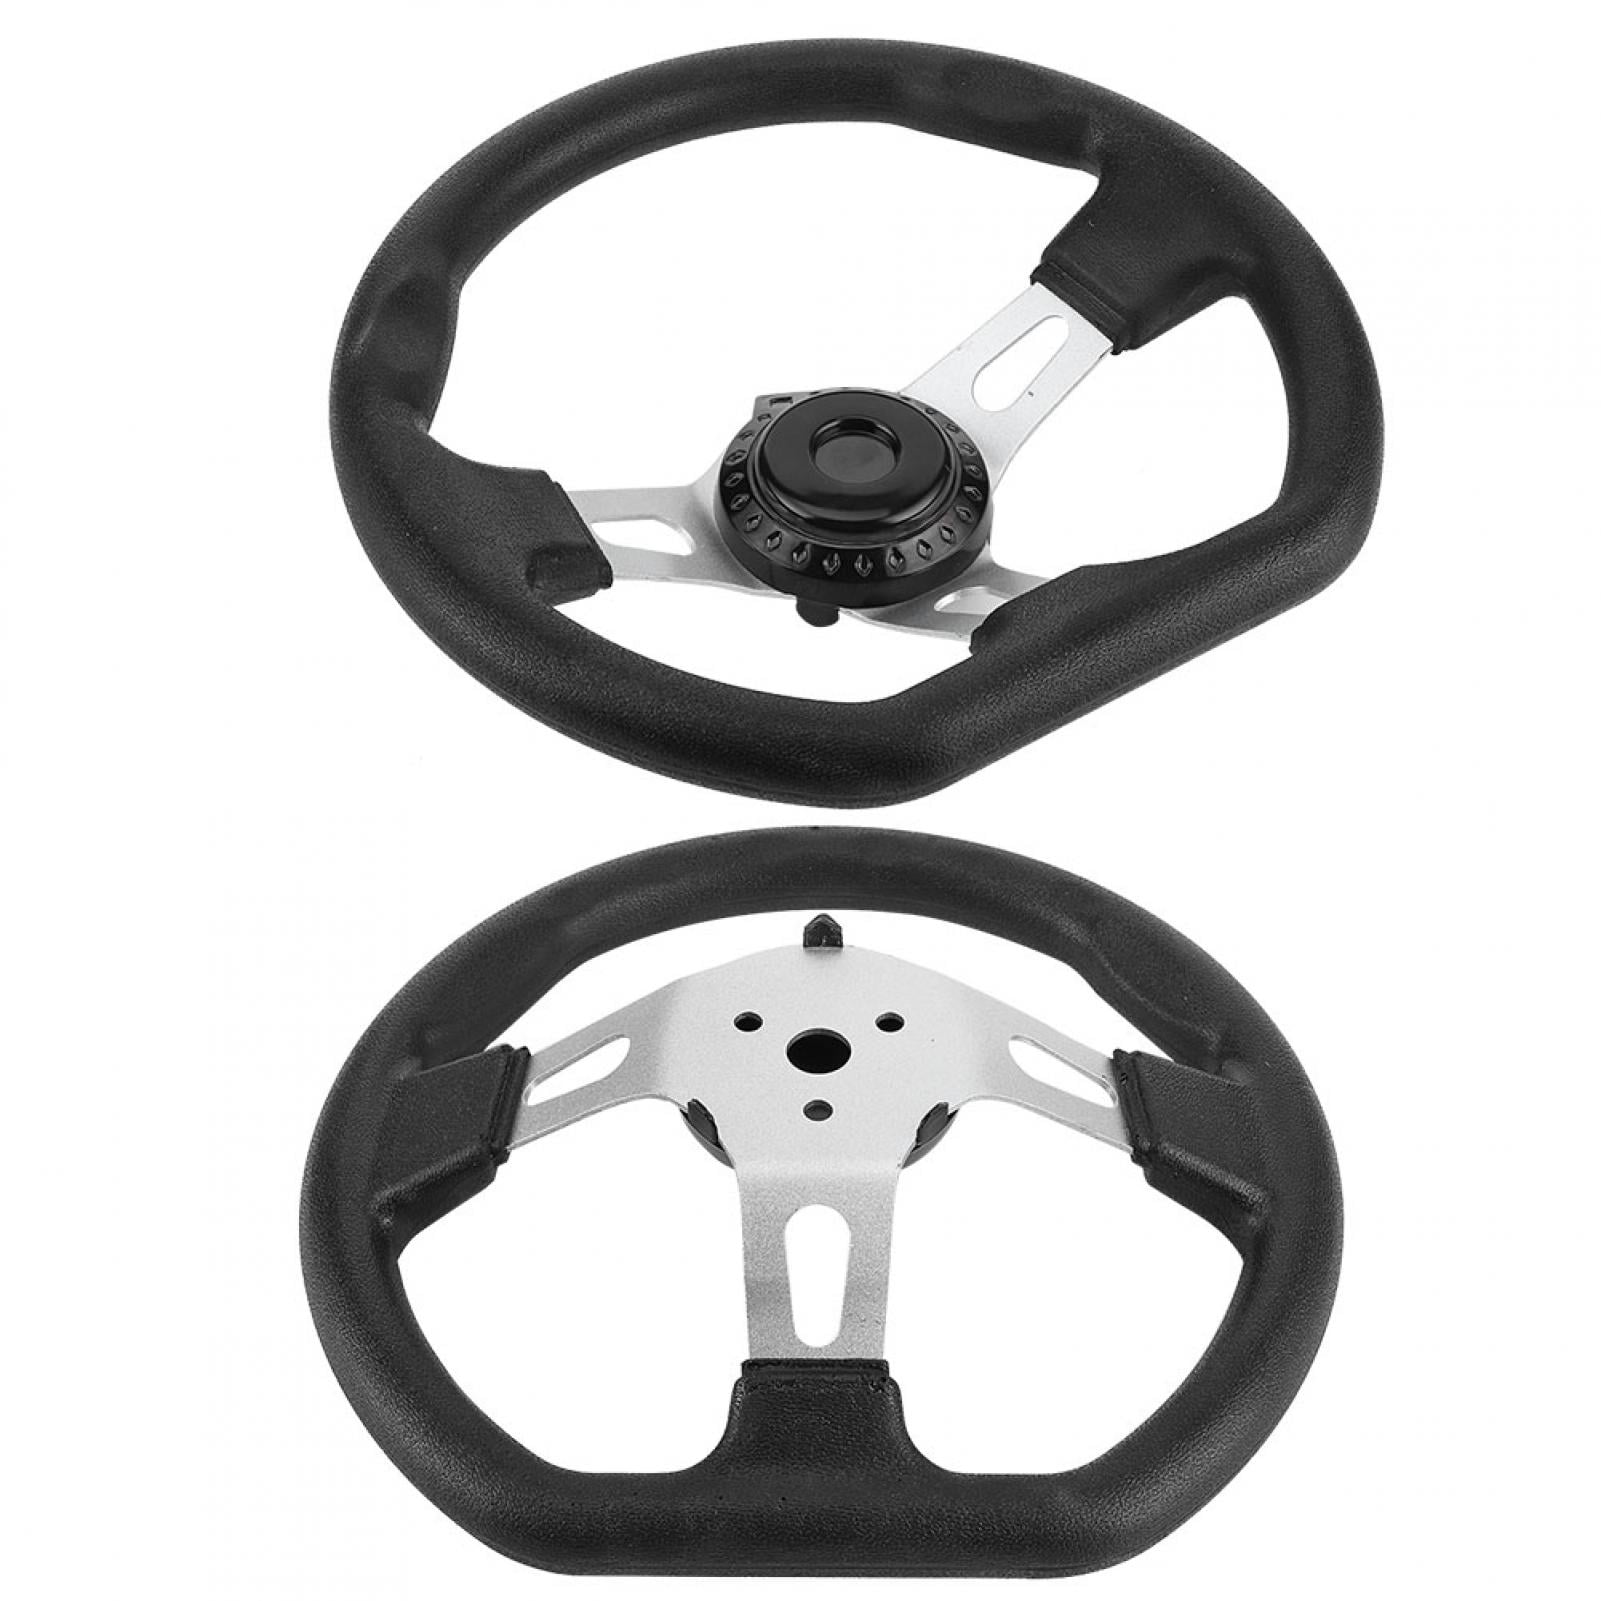 Go Kart Steering Wheel Racing Cart Part 270mm Black 